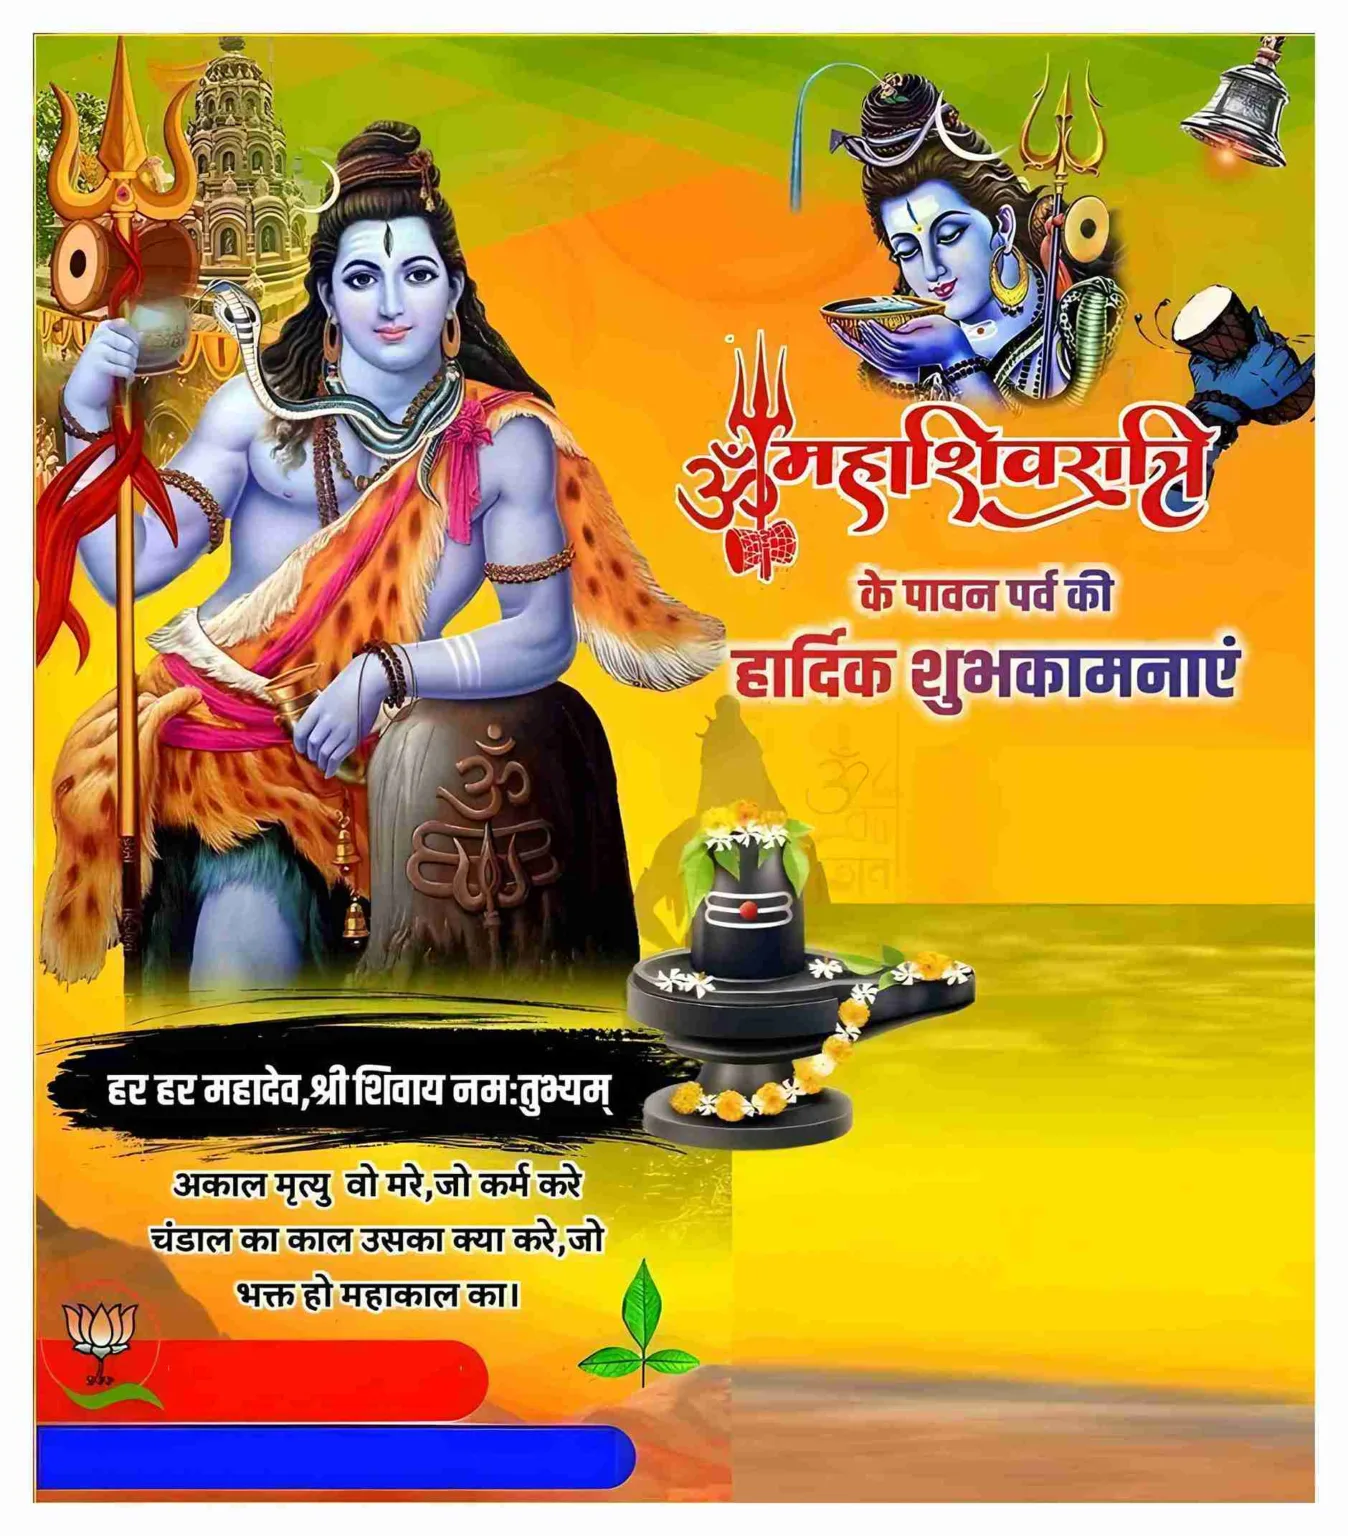 Shivratri Ki Shubhkamnaye Poster Background PLP